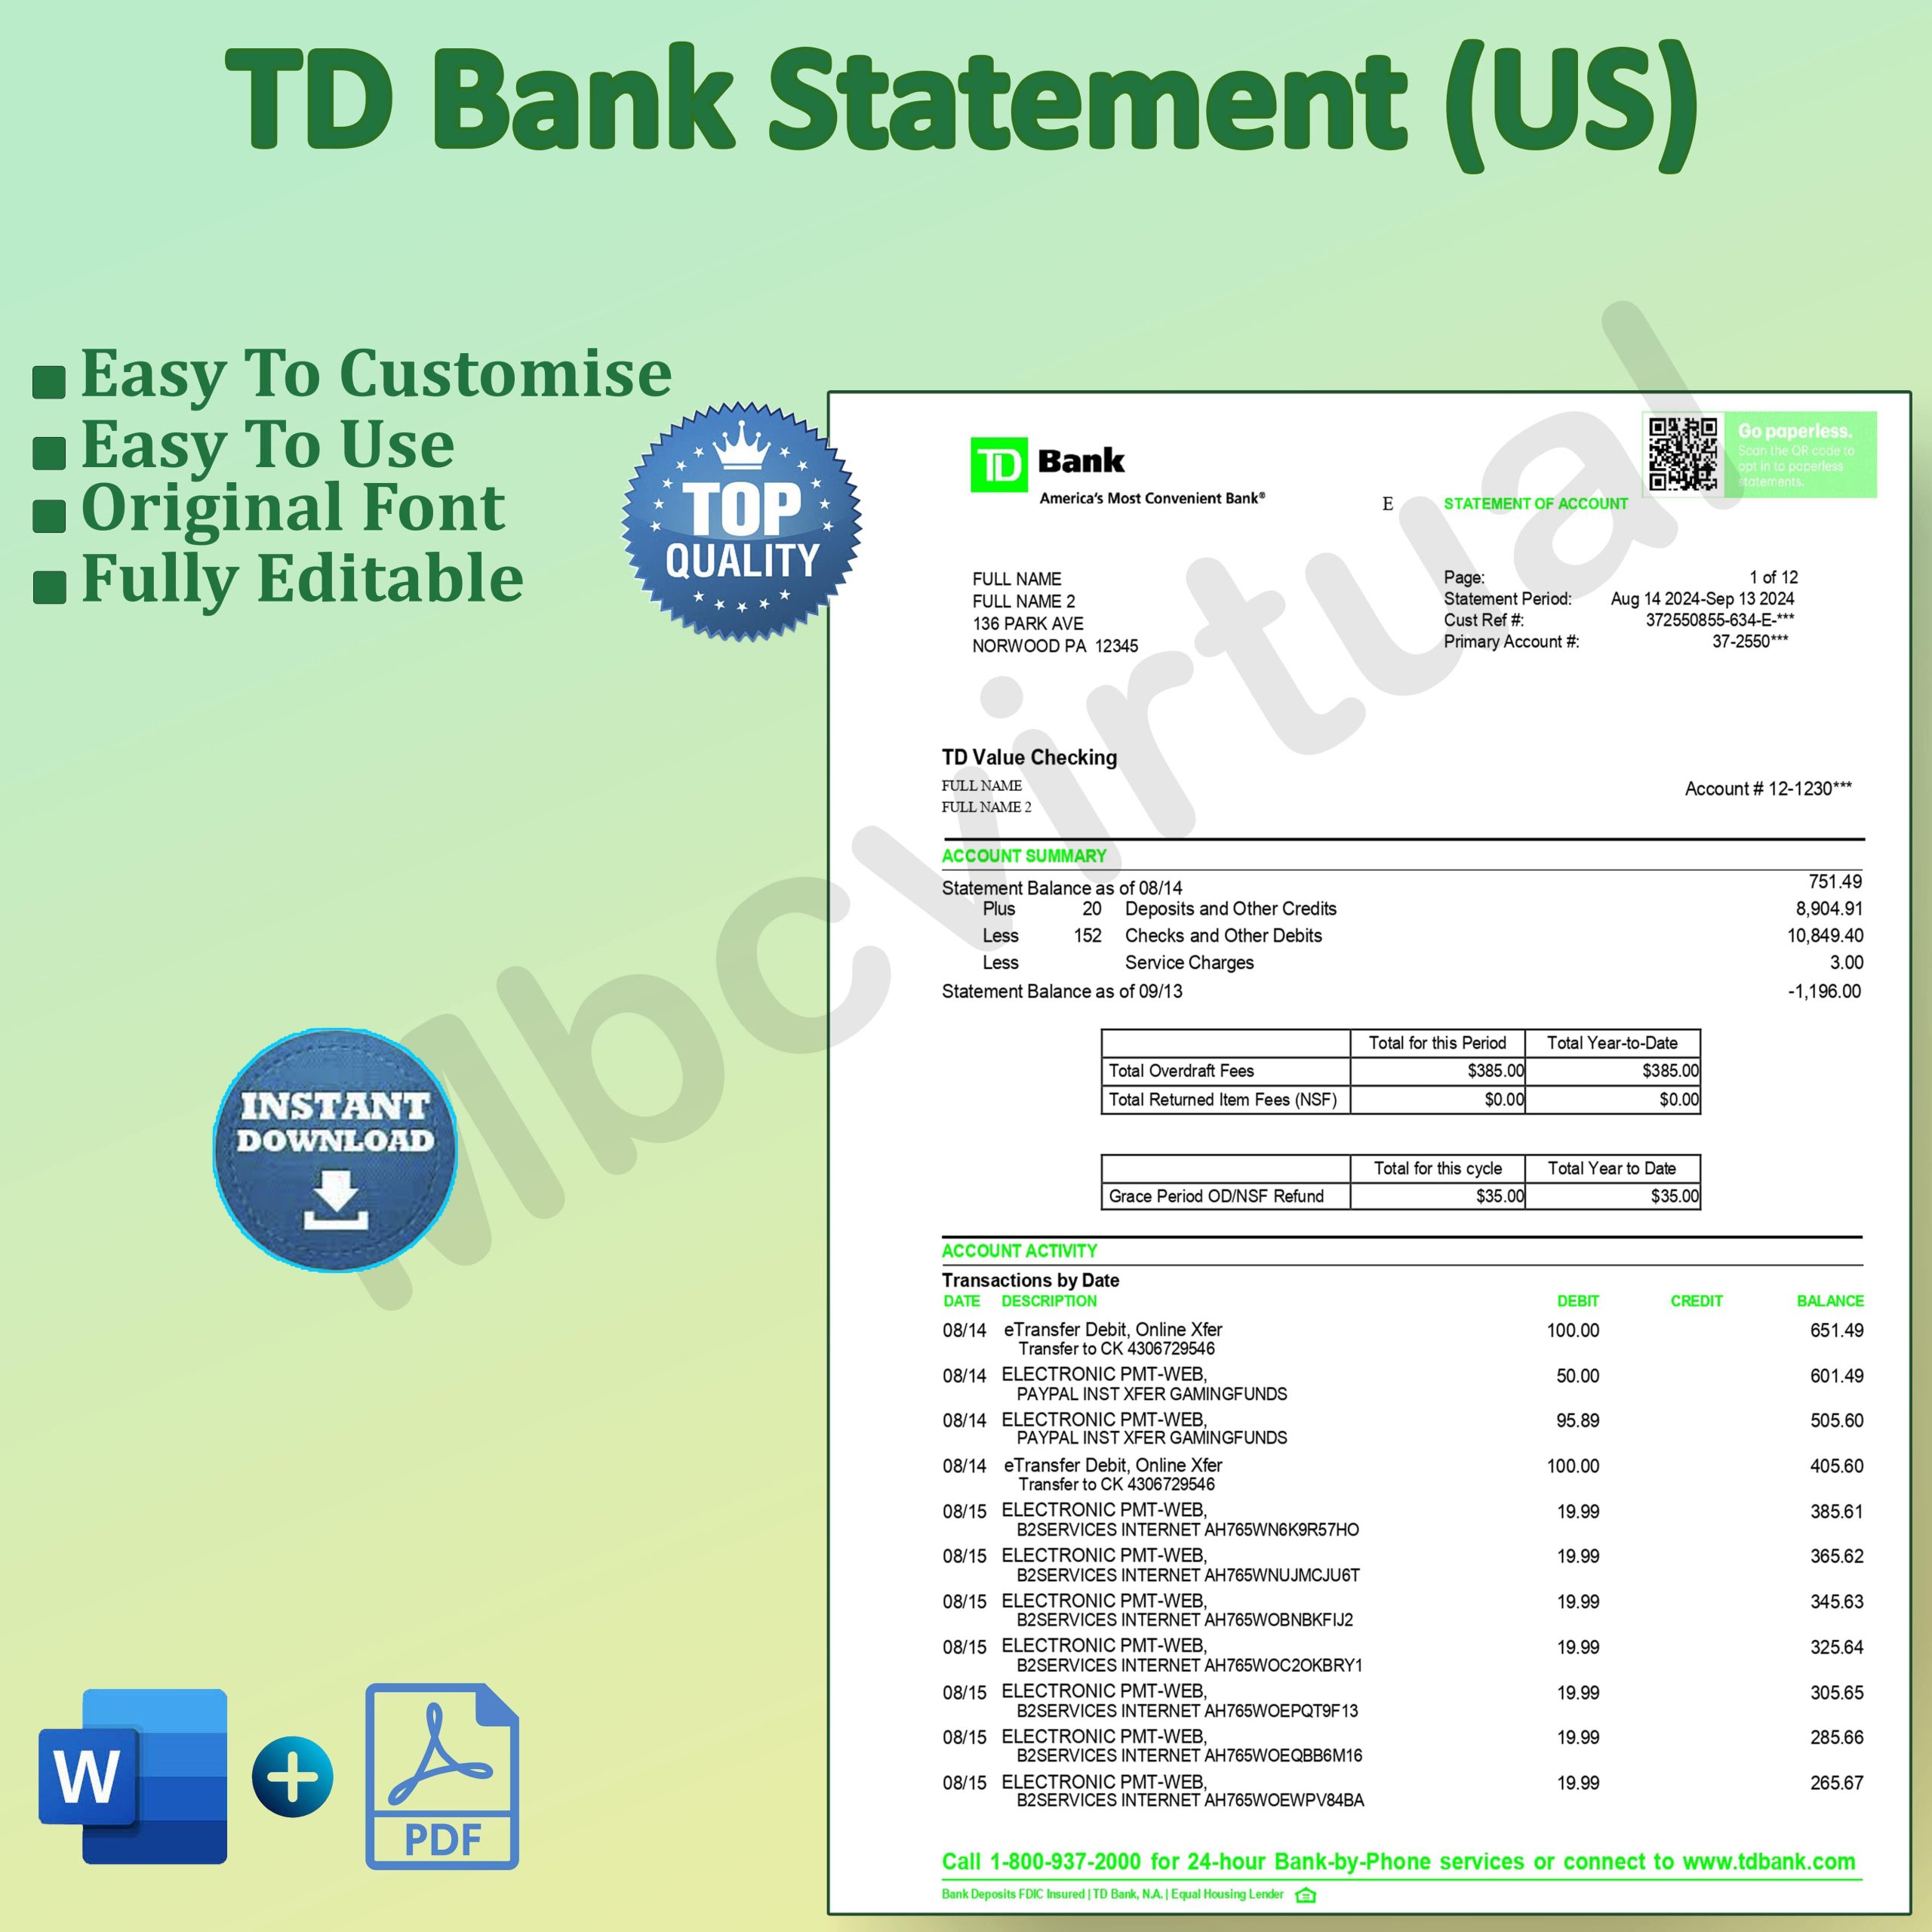 TD Bank Statement (US)